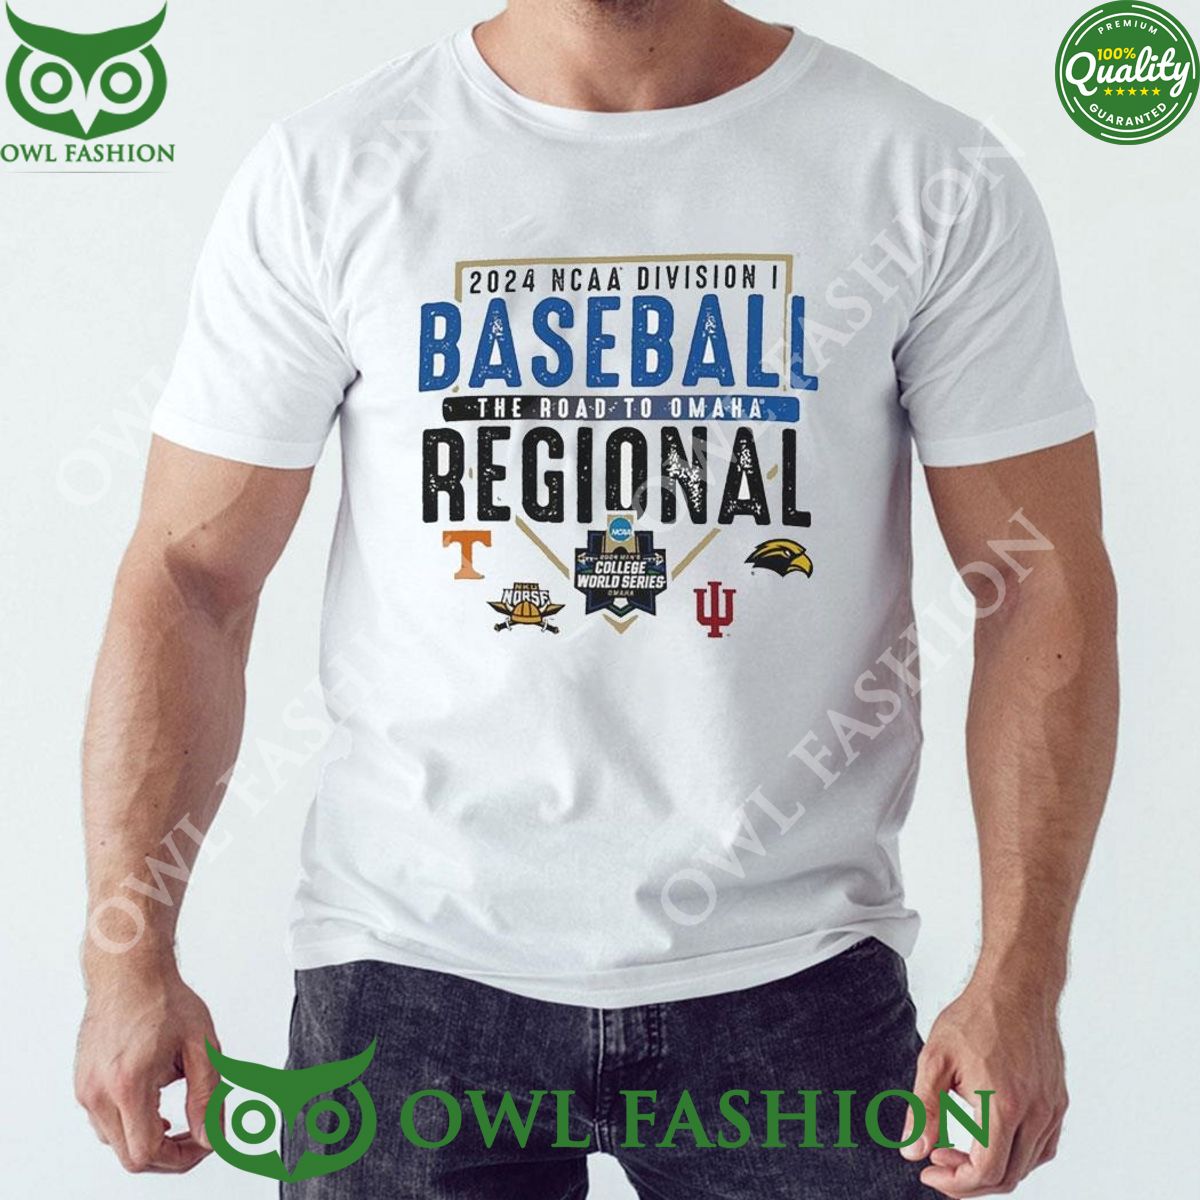 regional the road to omaha tennessee 2024 ncaa division i baseball tshirt hoodie 1 BGpHw.jpg